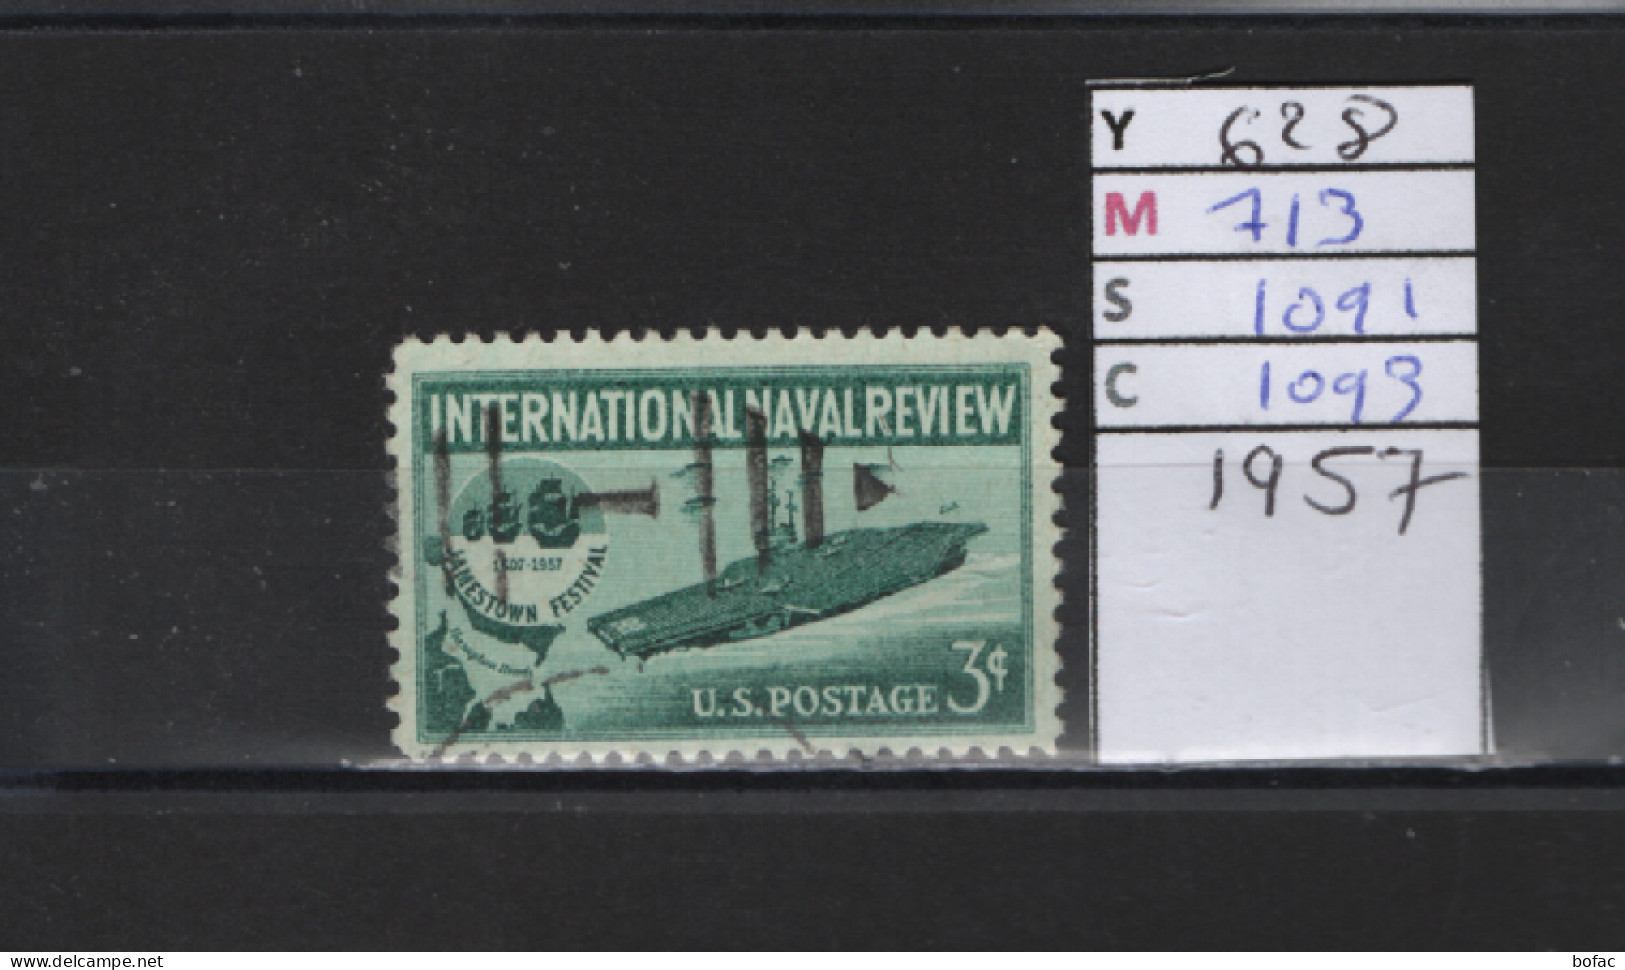 PRIX FIXE Obl  628 YT 713 MIC 1091 SCO 1093 GIB  International Naval Review 1957 S Etats Unis  58A/07 - Gebraucht